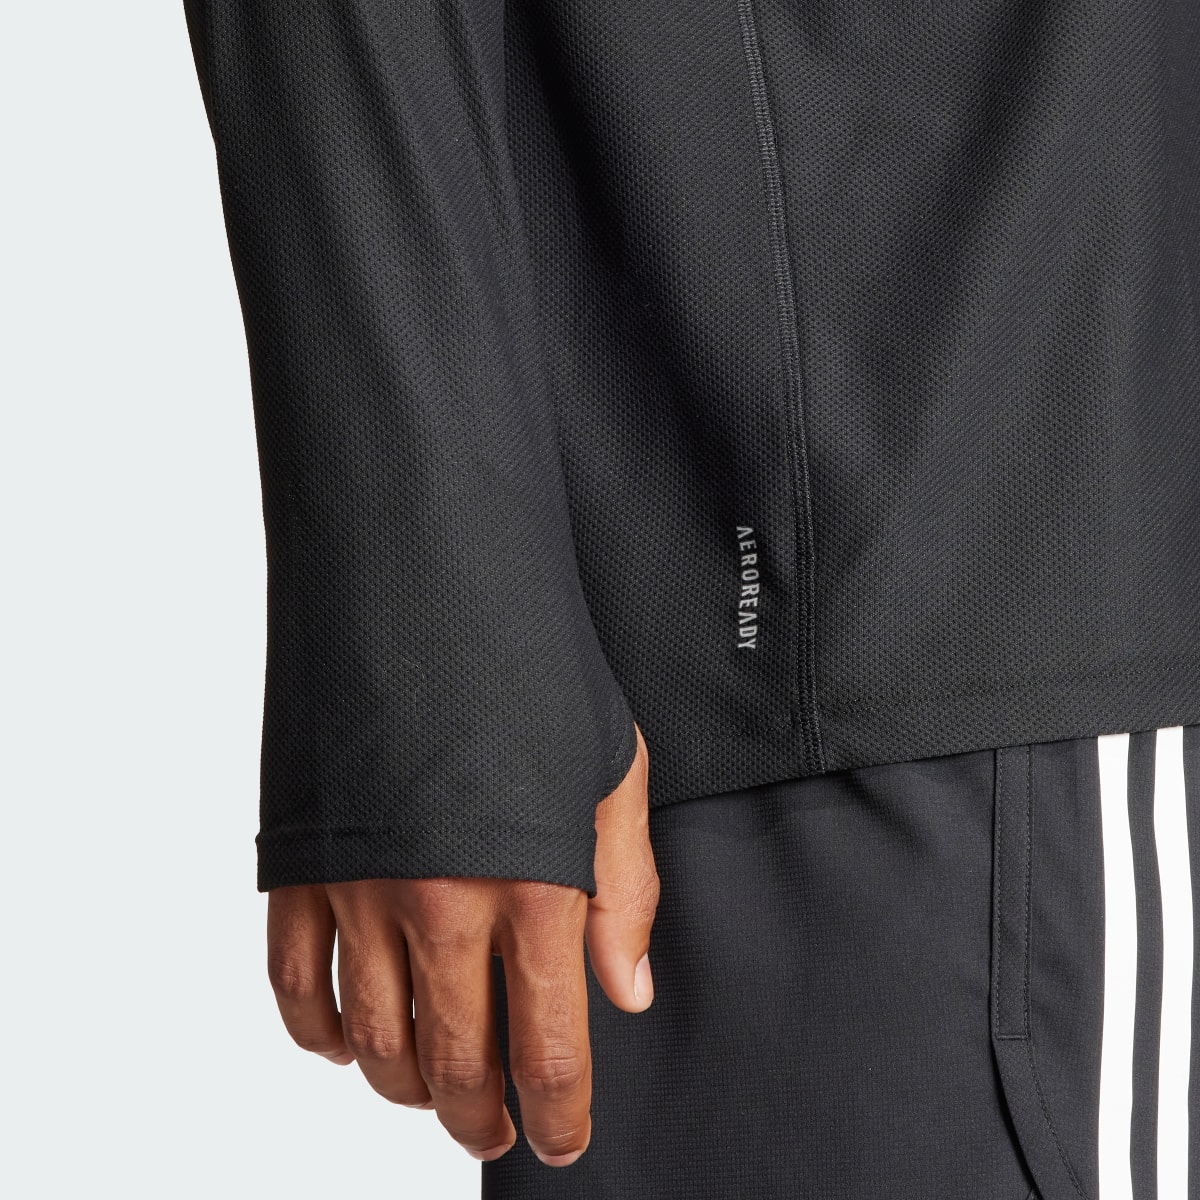 Adidas Own The Run Long-Sleeve Top. 7